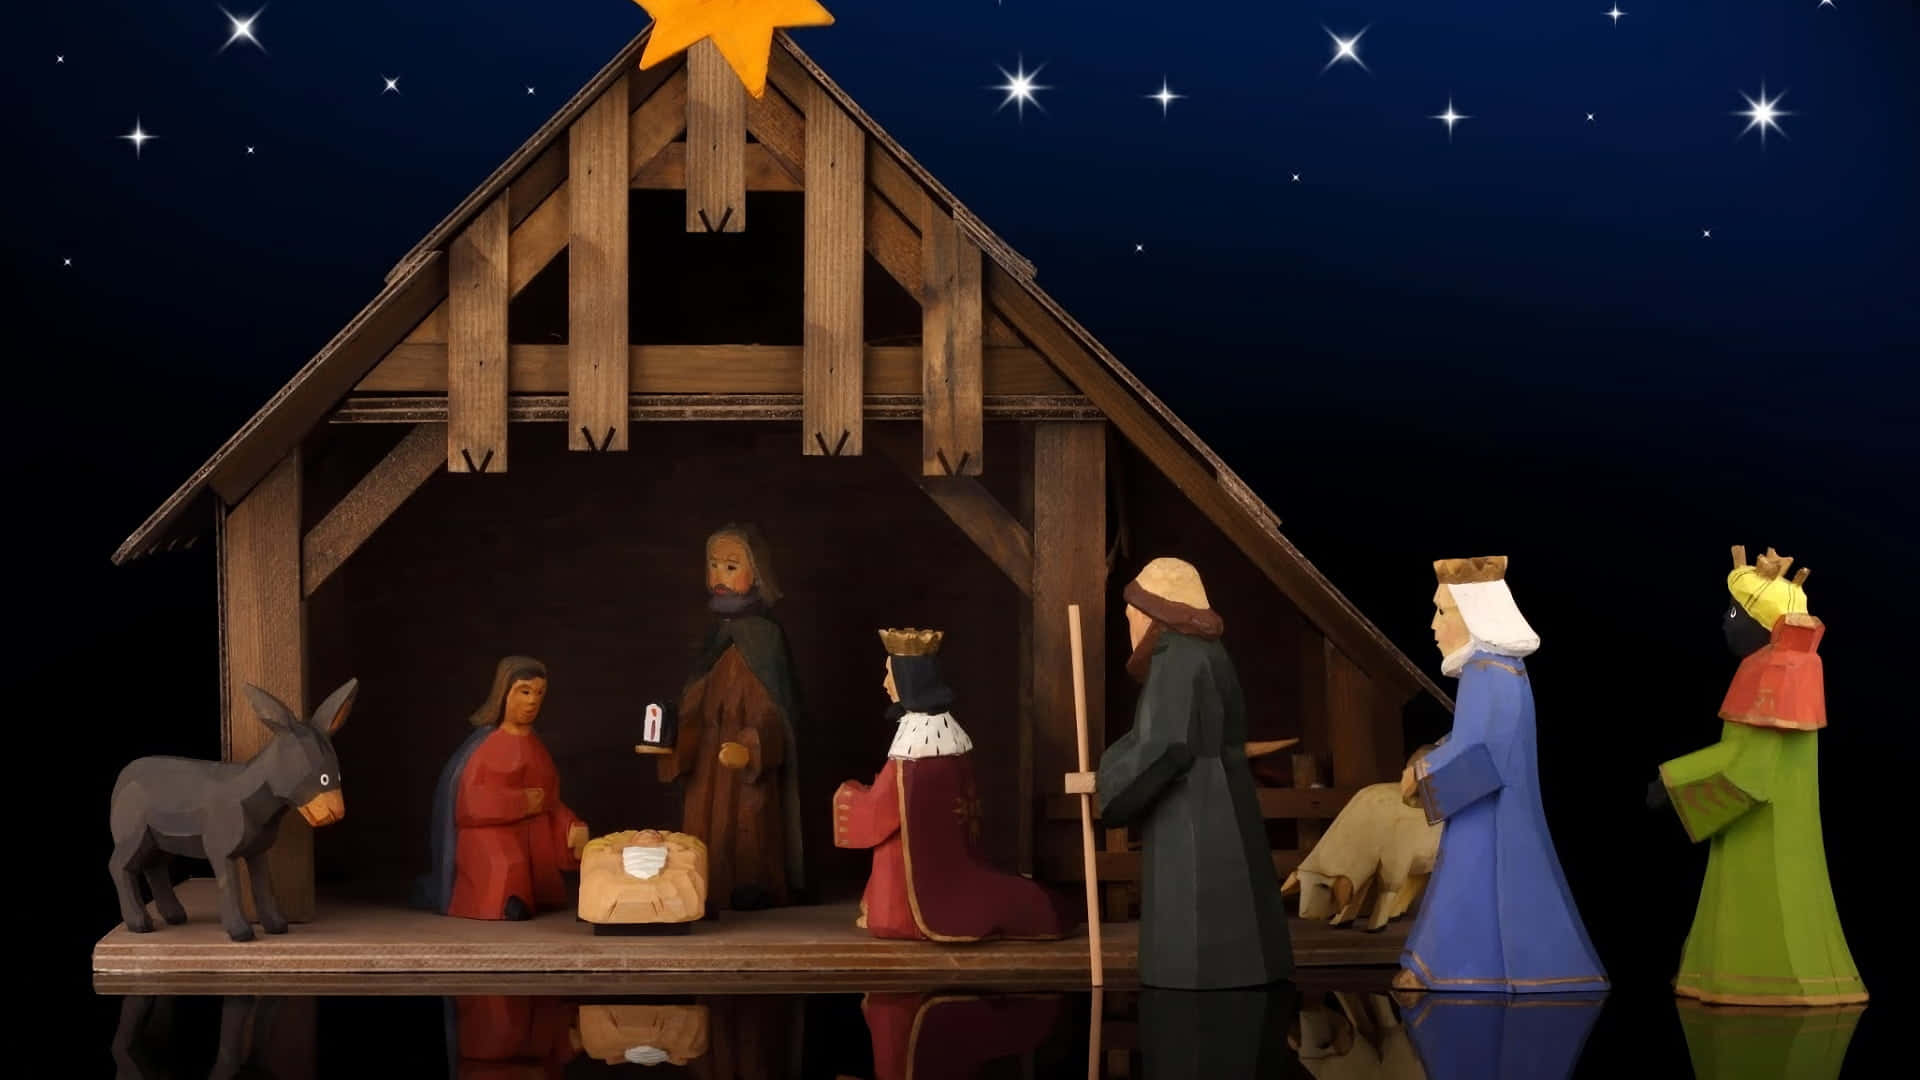 Celebrate Jesus this Christmas Wallpaper